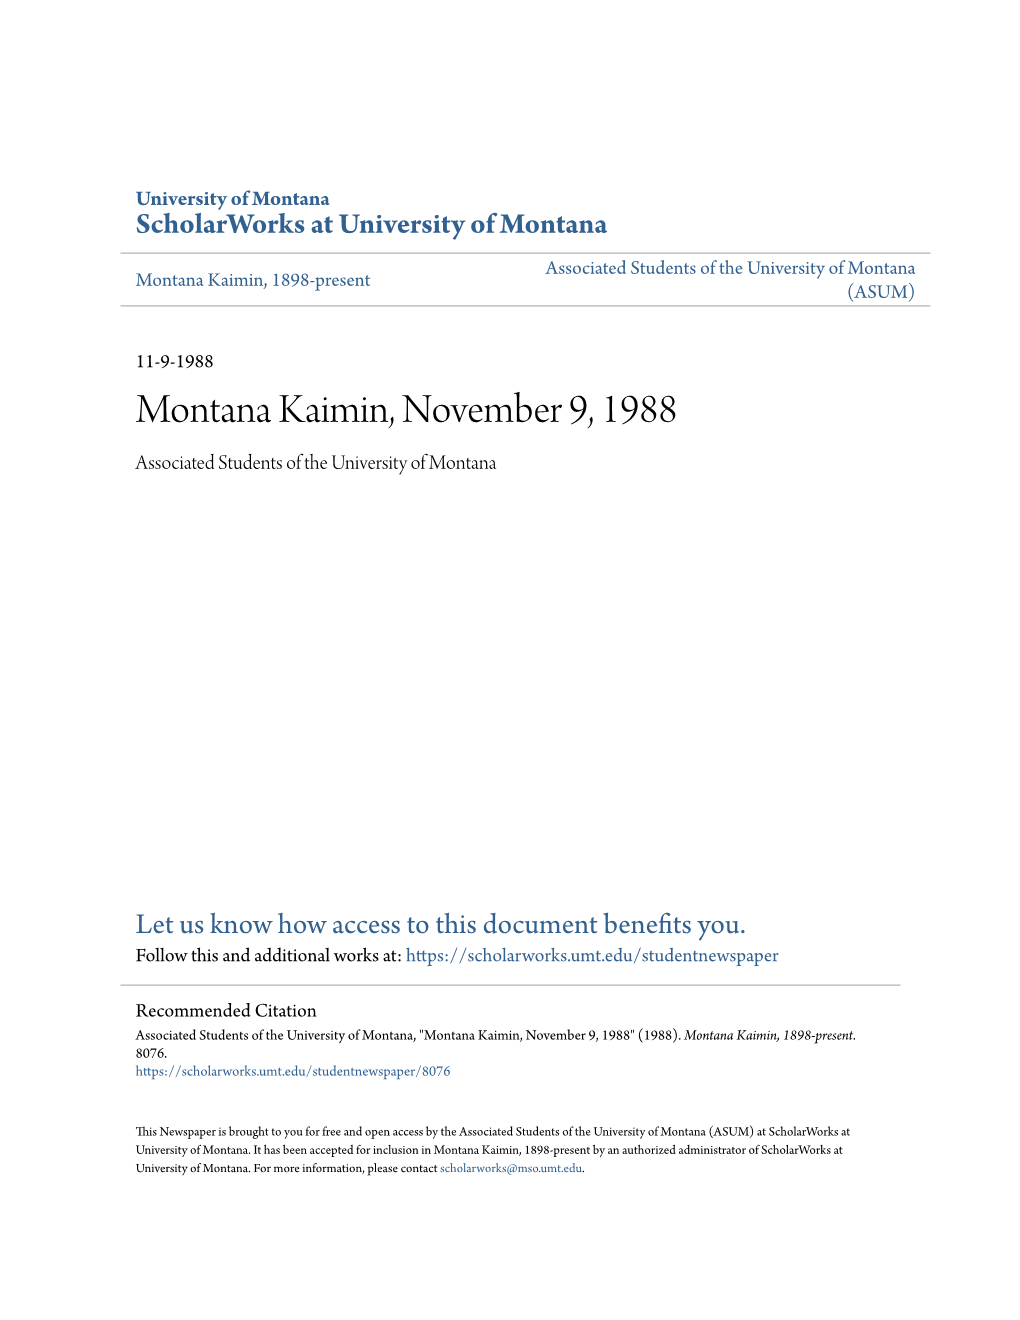 Montana Kaimin, November 9, 1988 Associated Students of the University of Montana